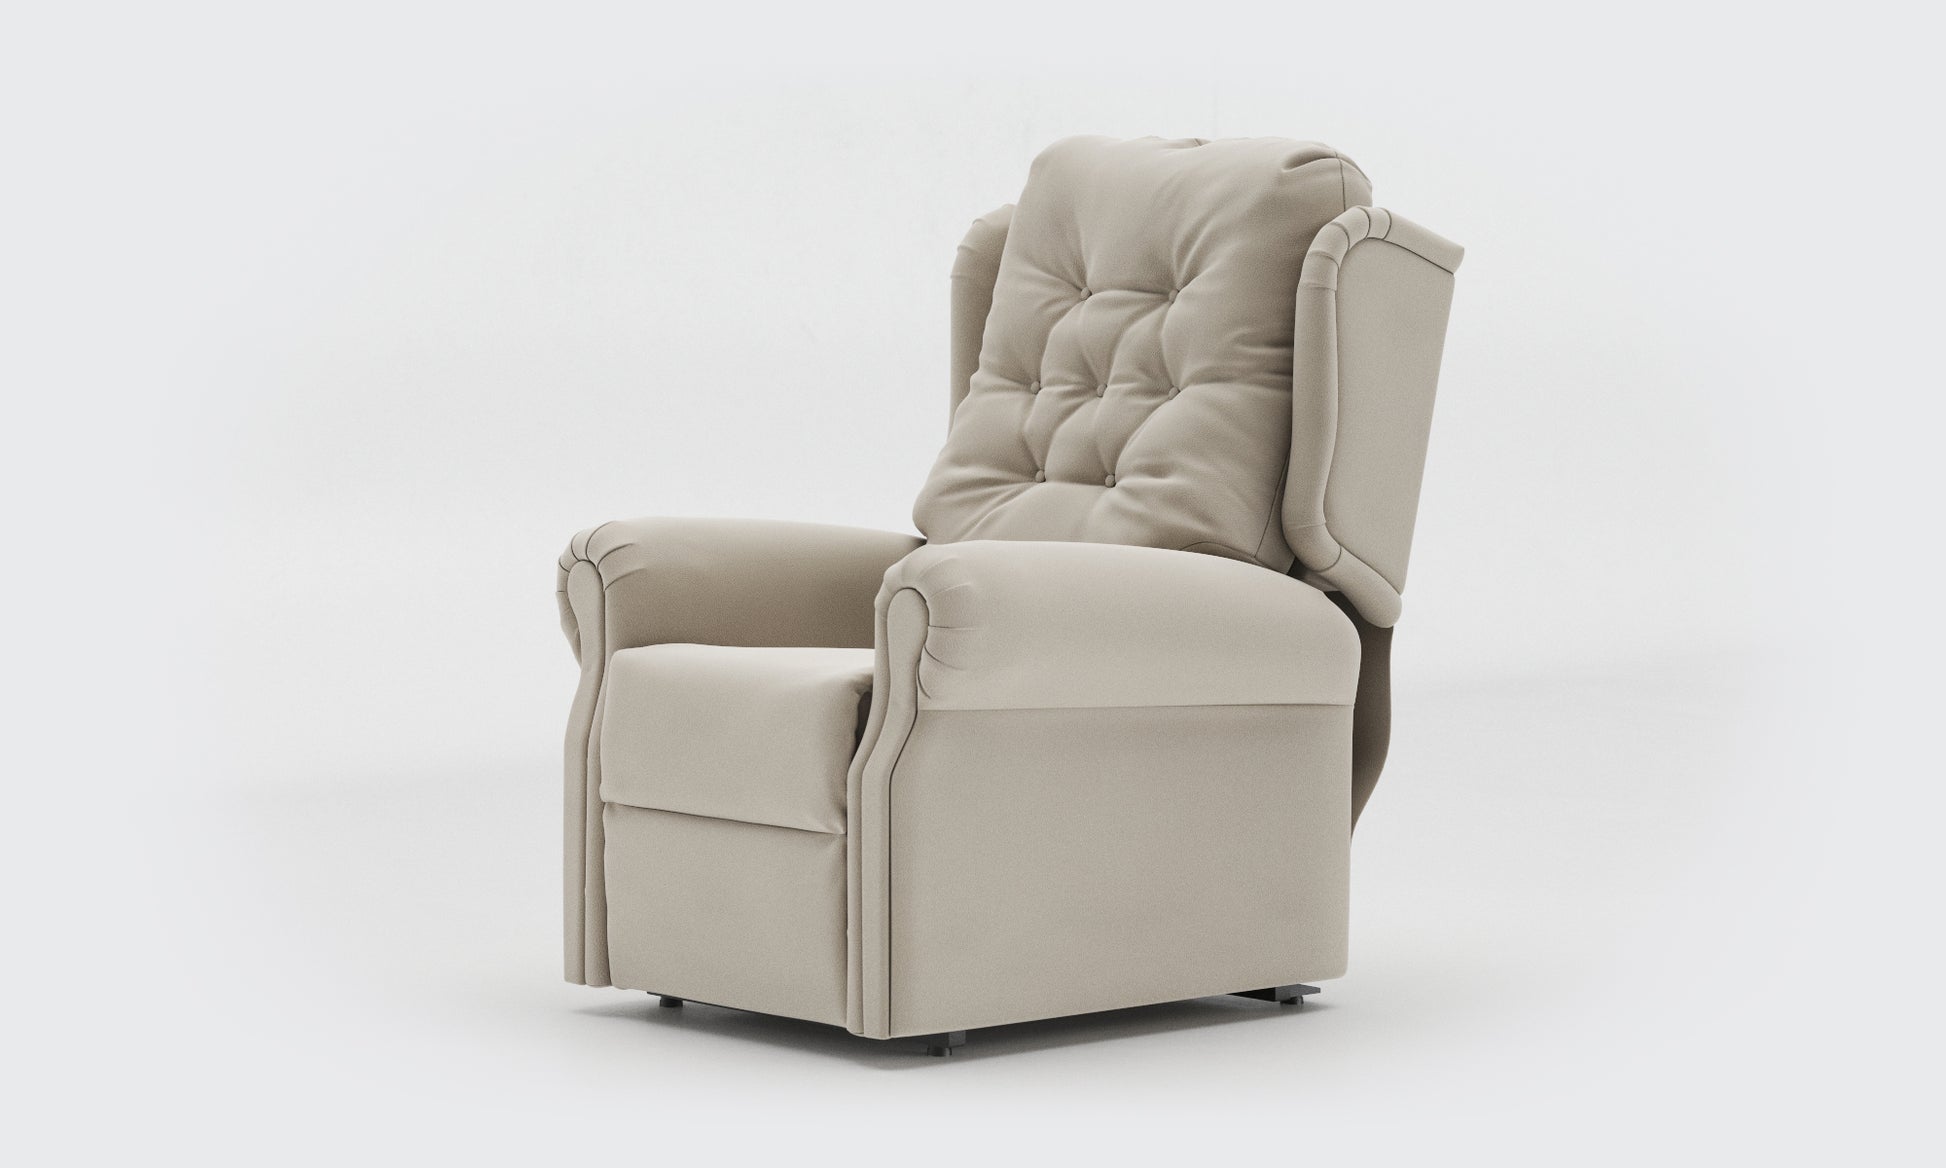 Adara Riser Recliner Chair compact buttons leather Sisal